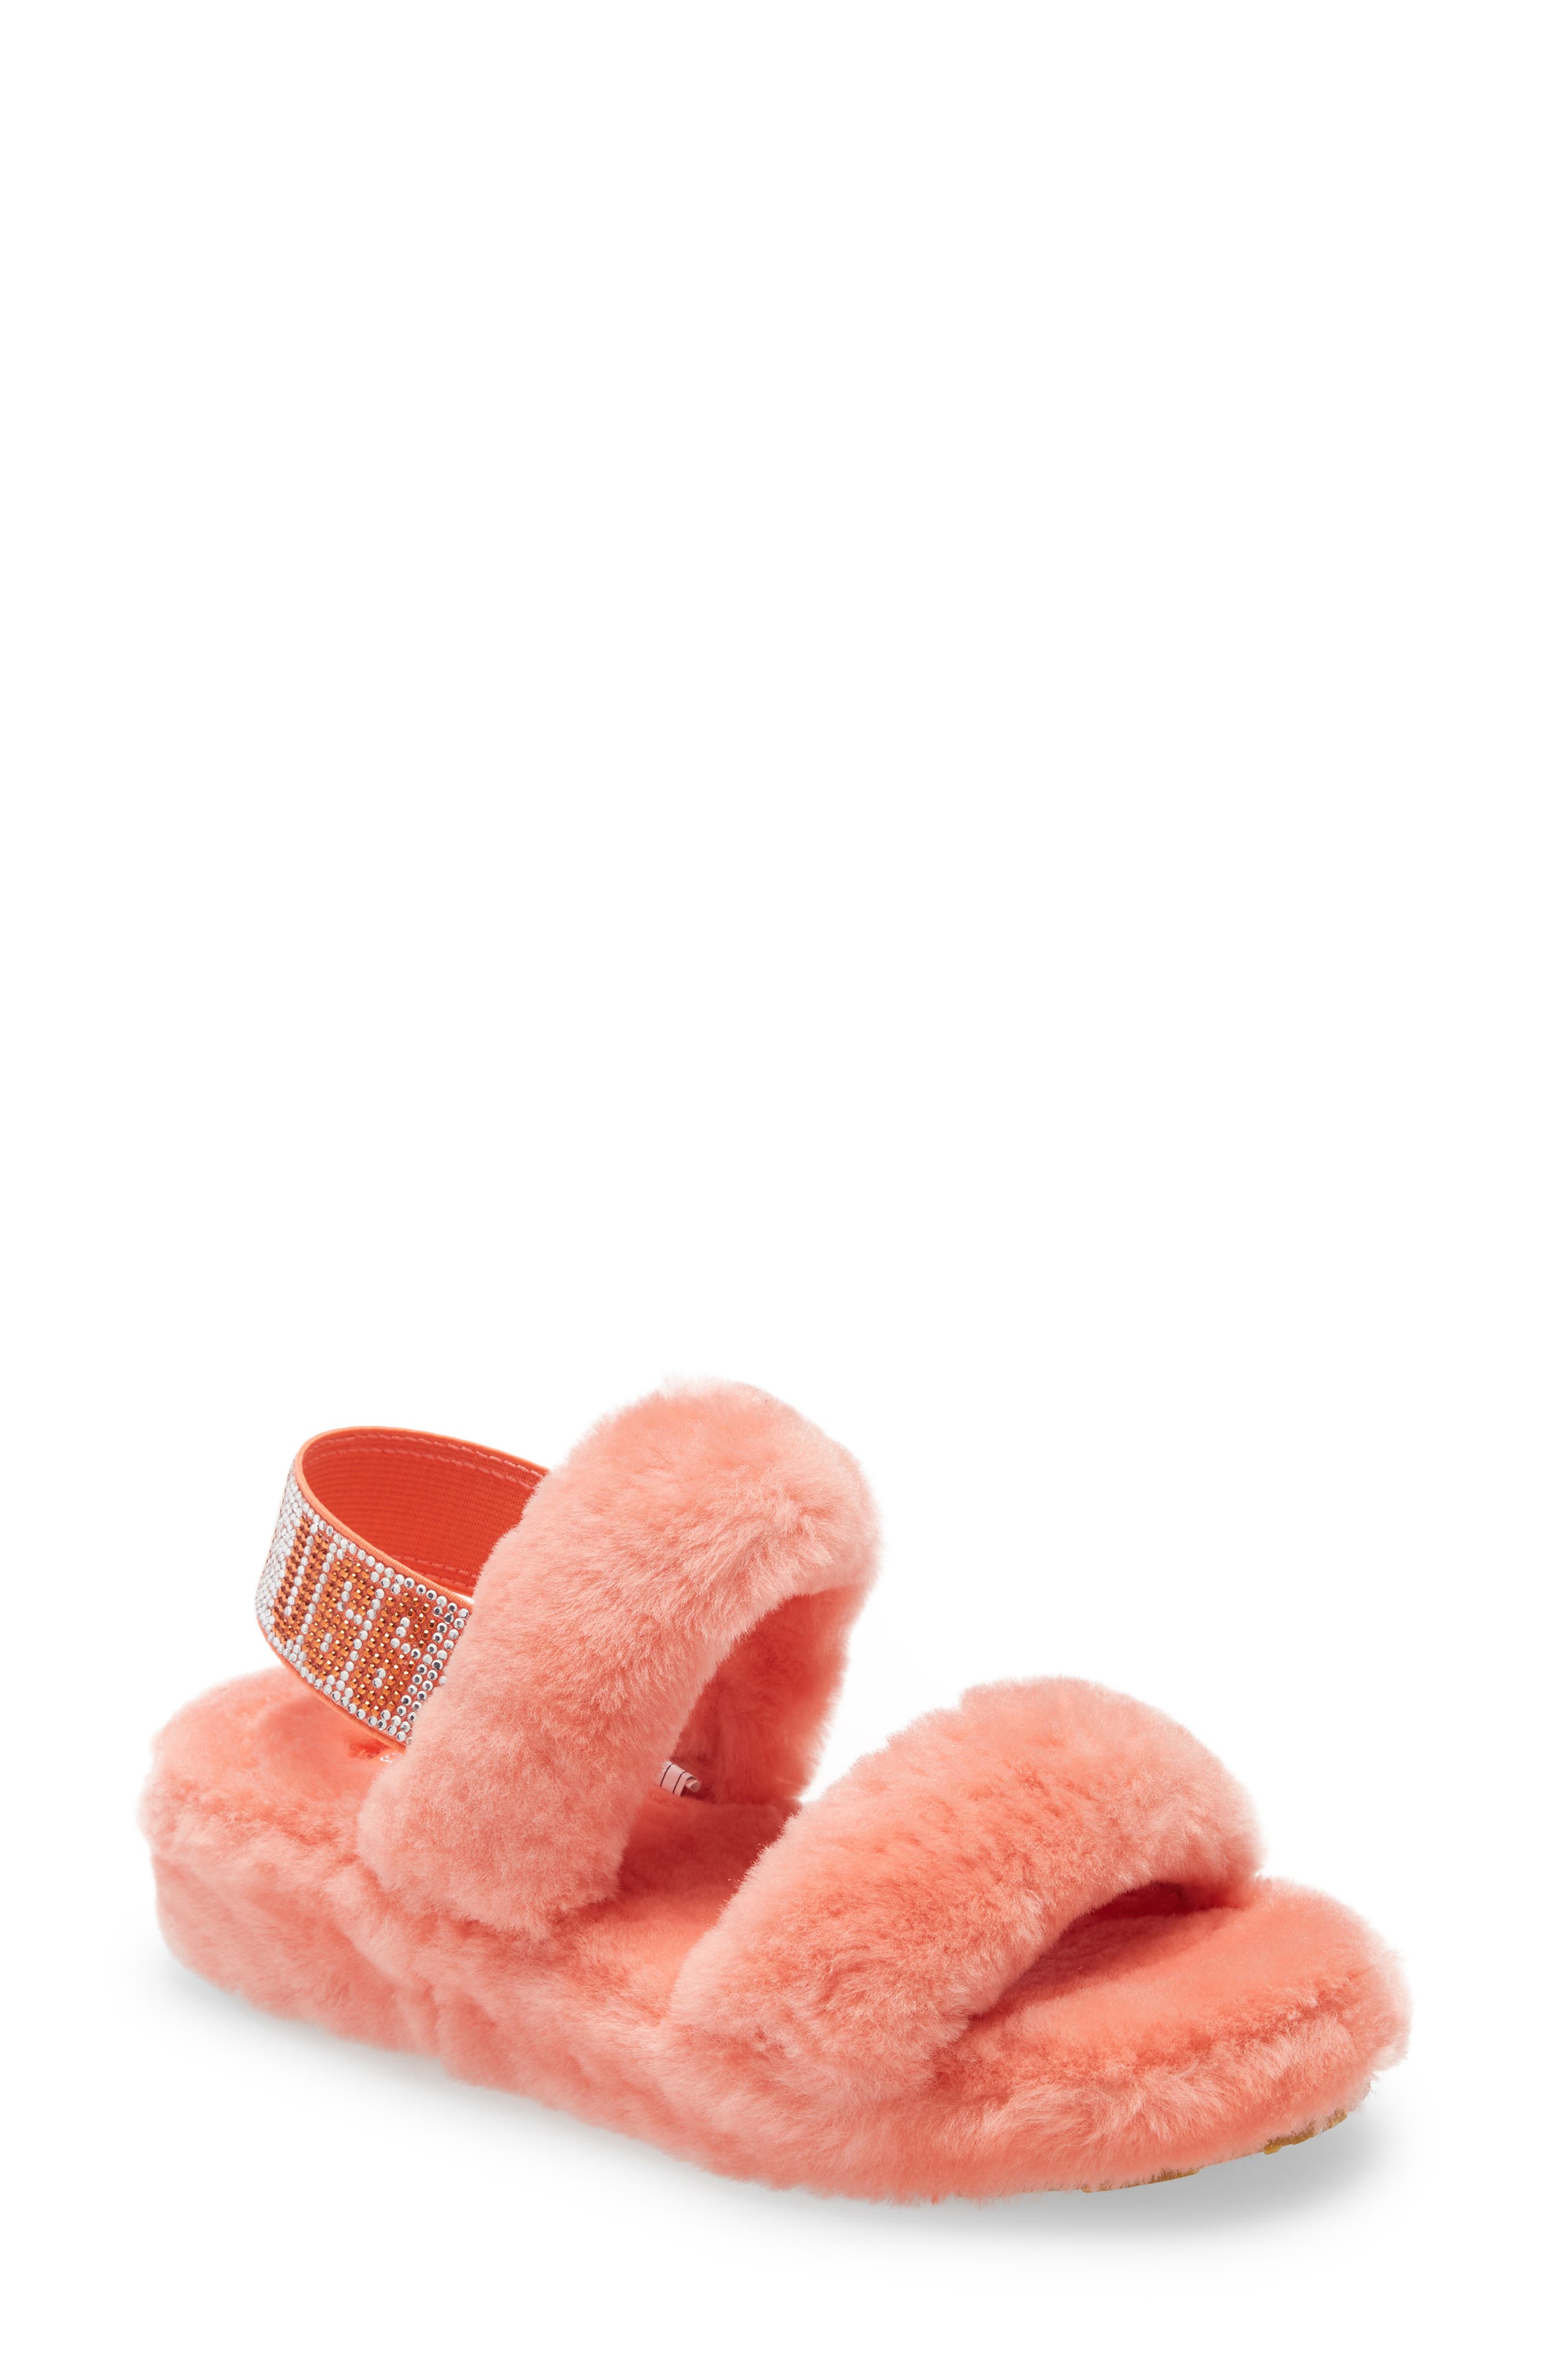 ugg slippers orange